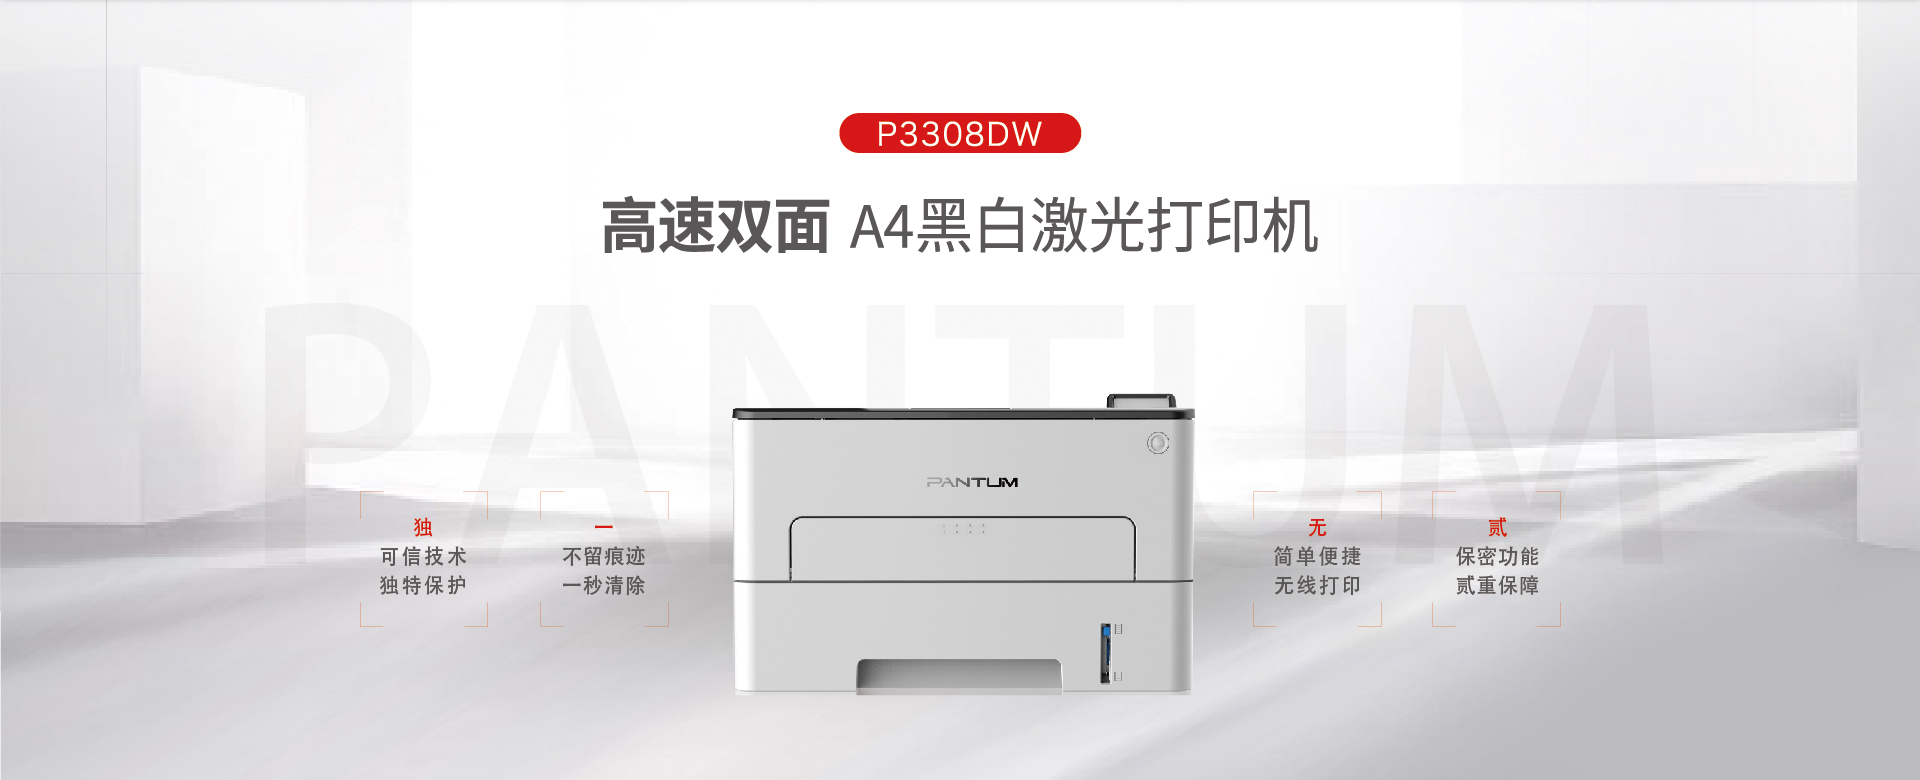 P3308DW安全打印机